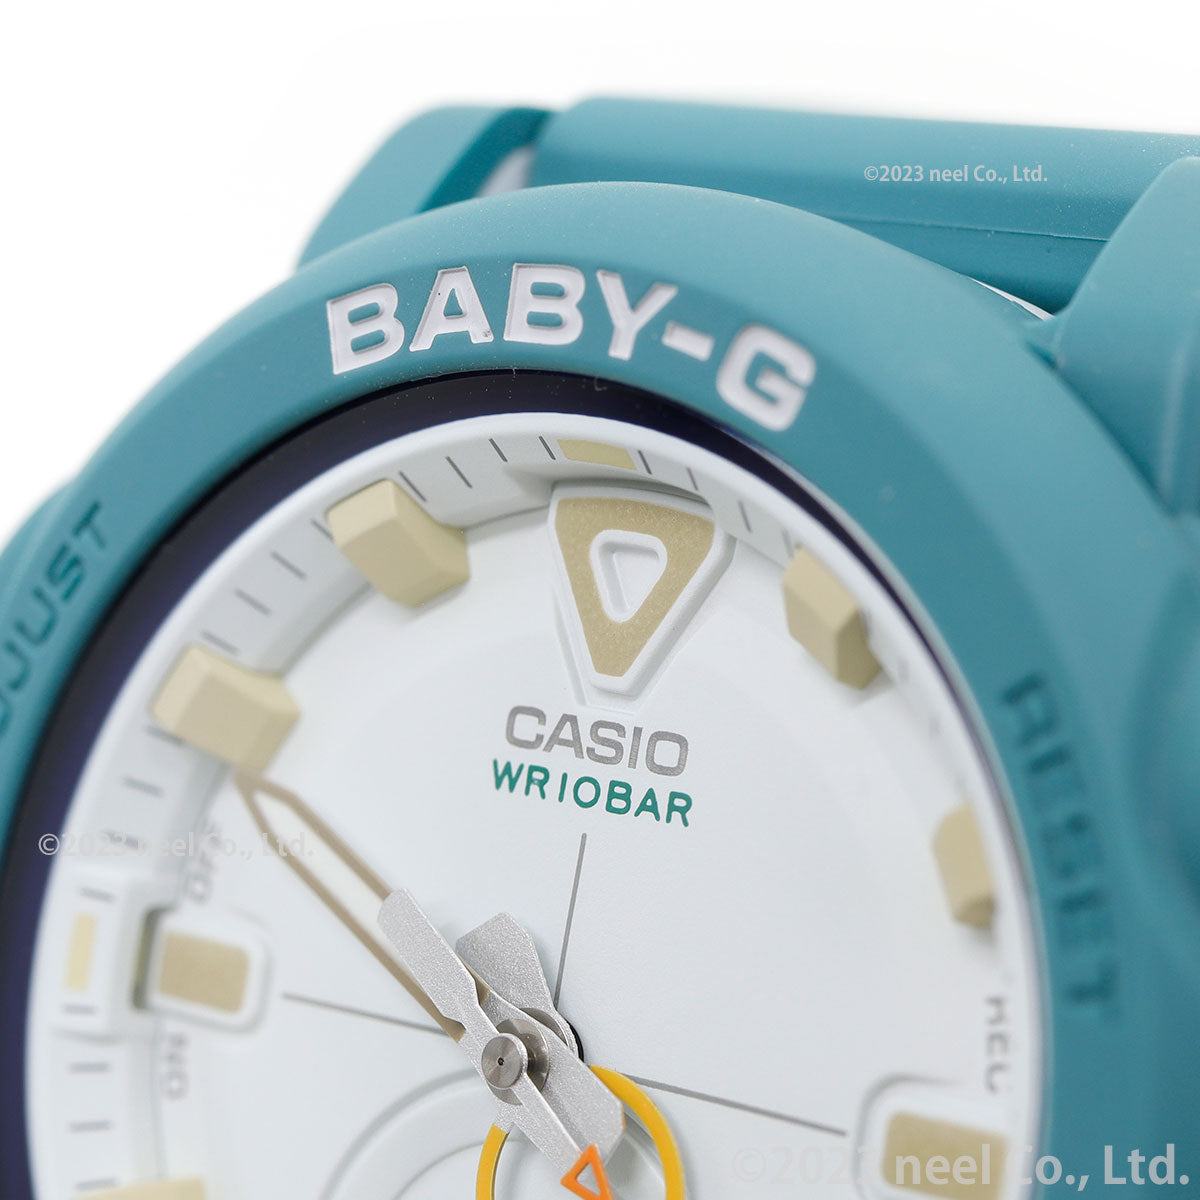 BABY-G カシオ ベビーG レディース アナデジ 腕時計 BGA-310RP-3AJF ターコイズグリーン【2023 新作】